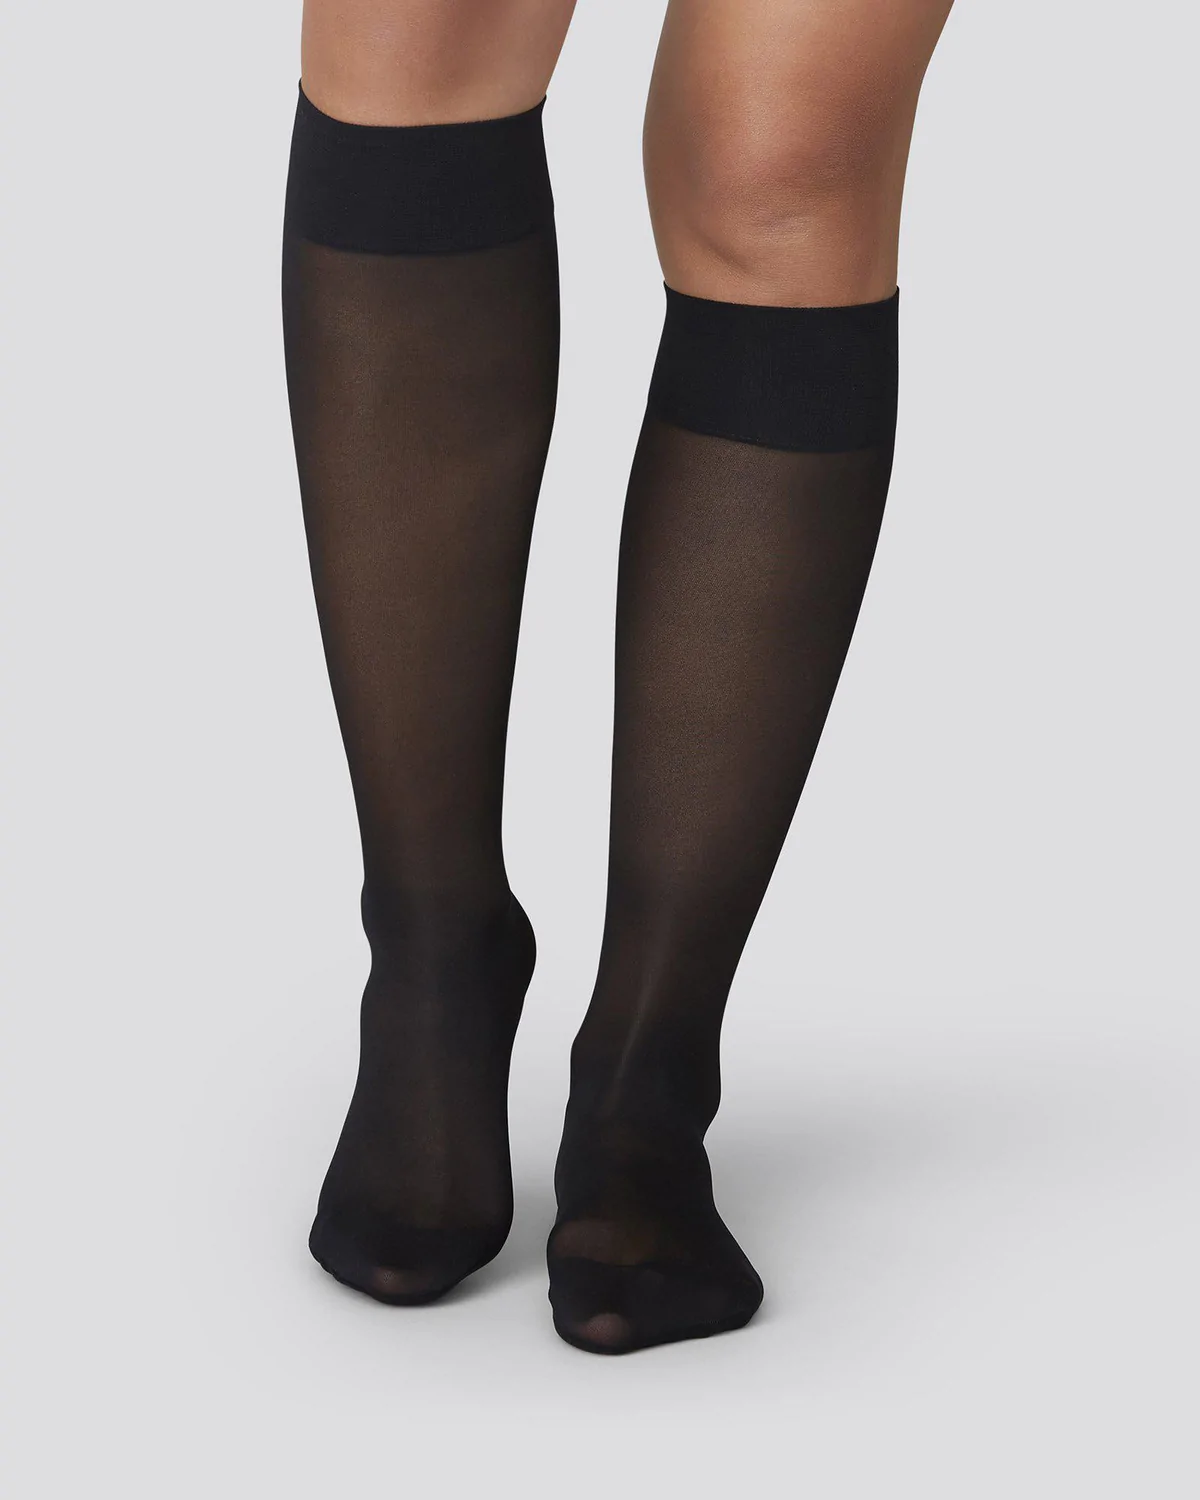 Bea Support Knee Highs Black Swedish Stockings